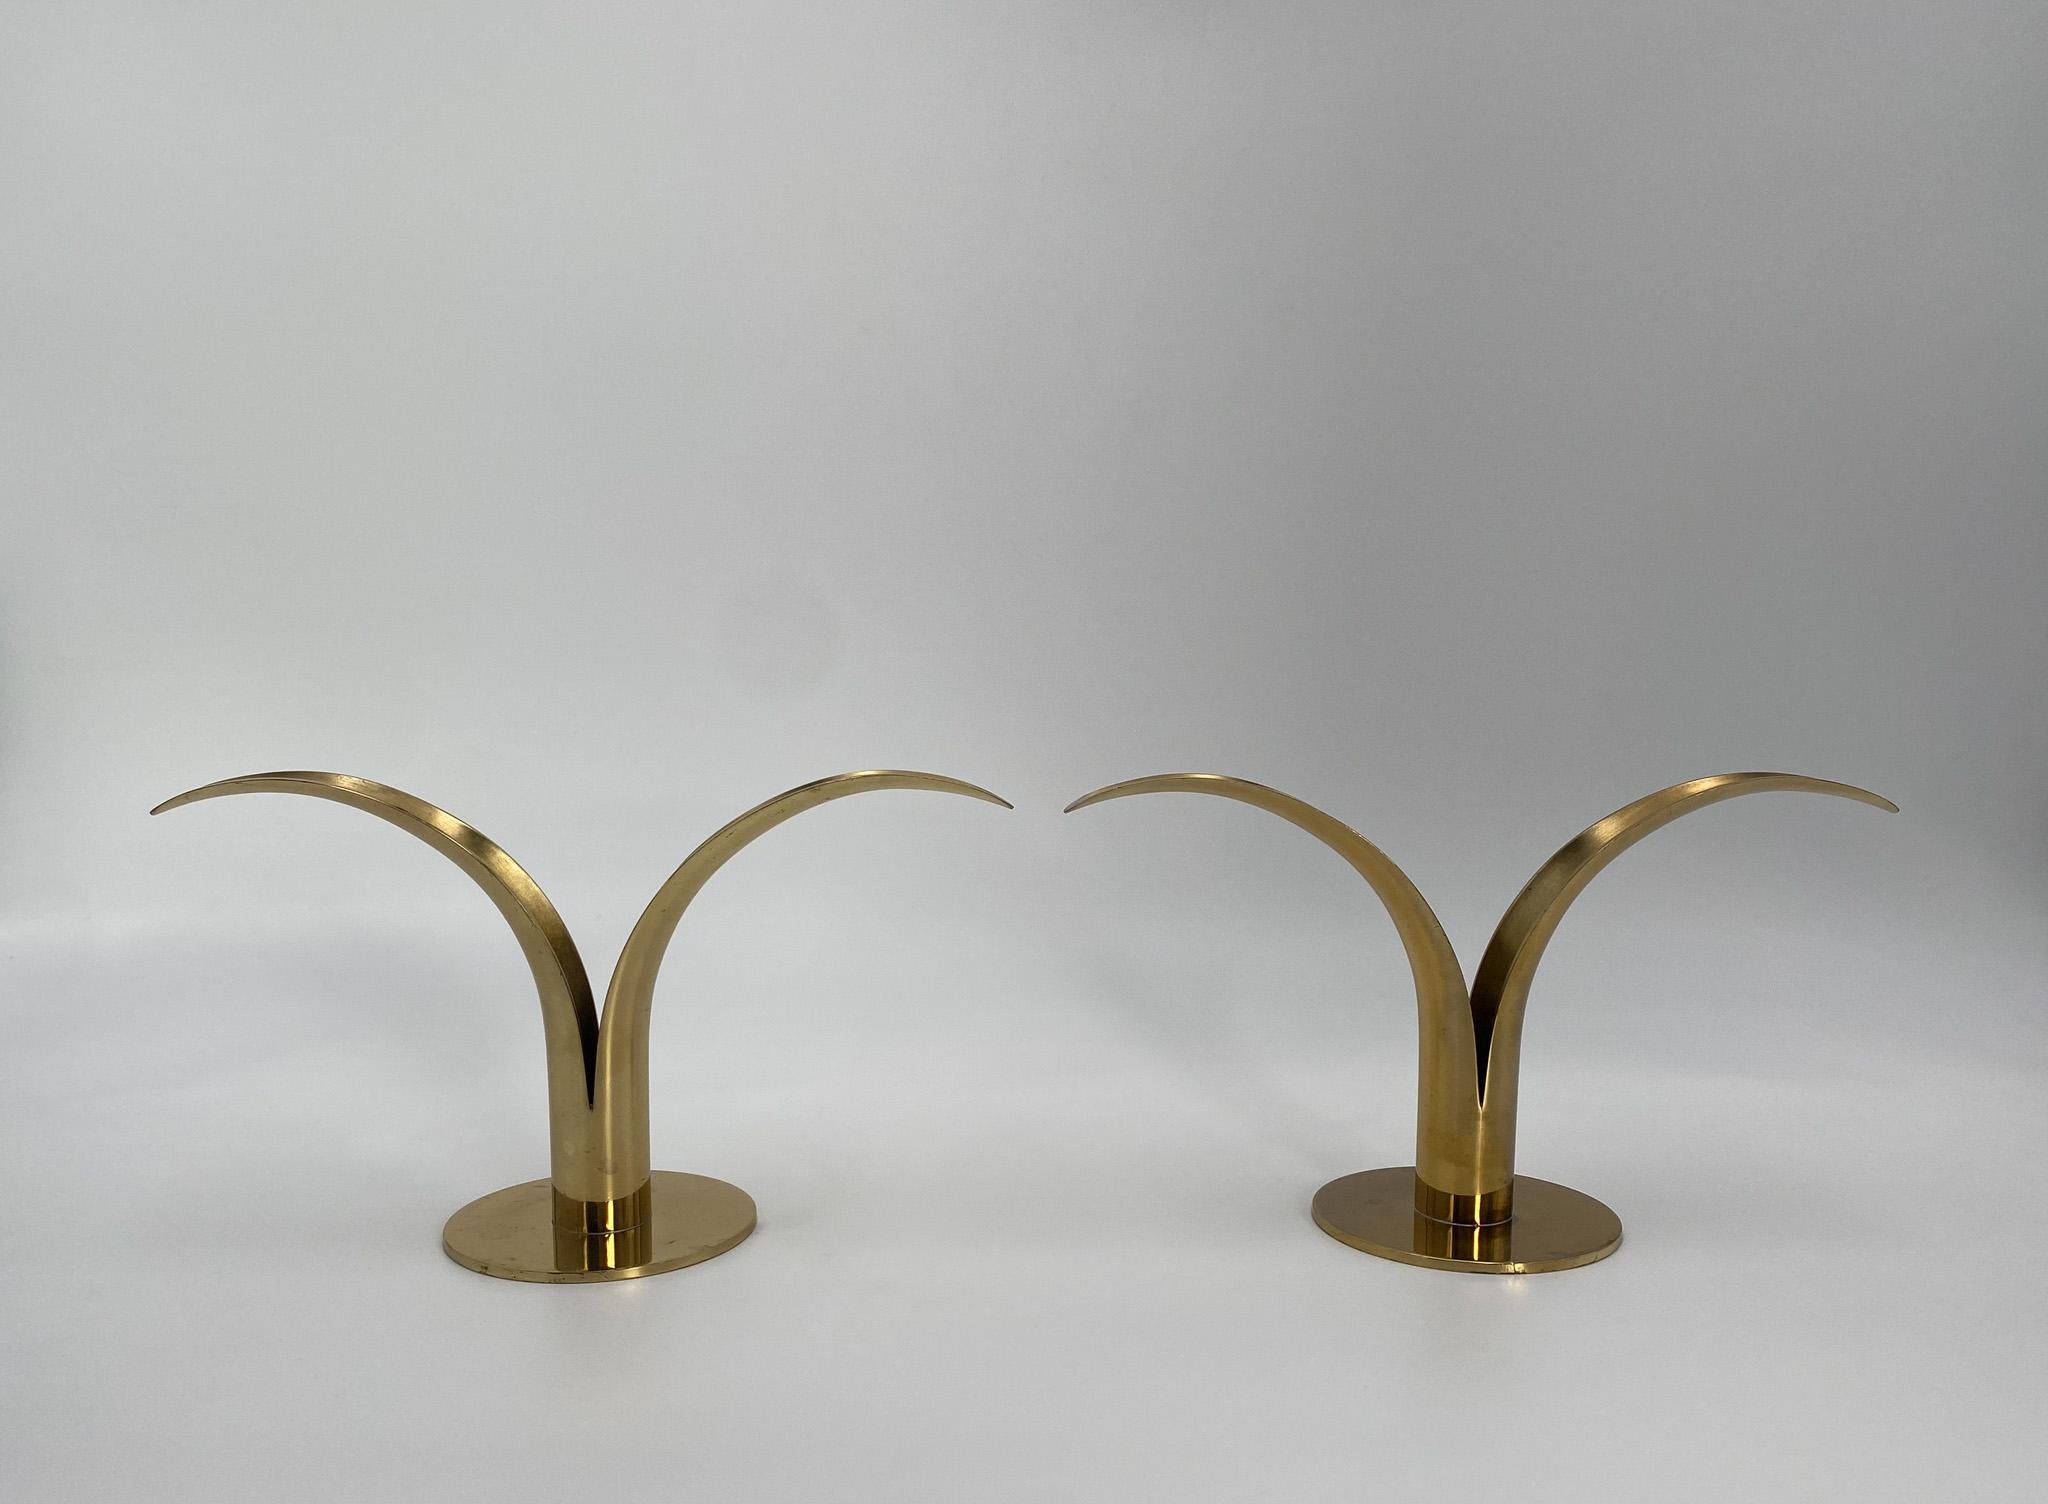 Ivar Ålenius Björk Brass Candle Holders for Ystad Metall, Sweden, 1960's.  Makers mark to the bottom of each example.  